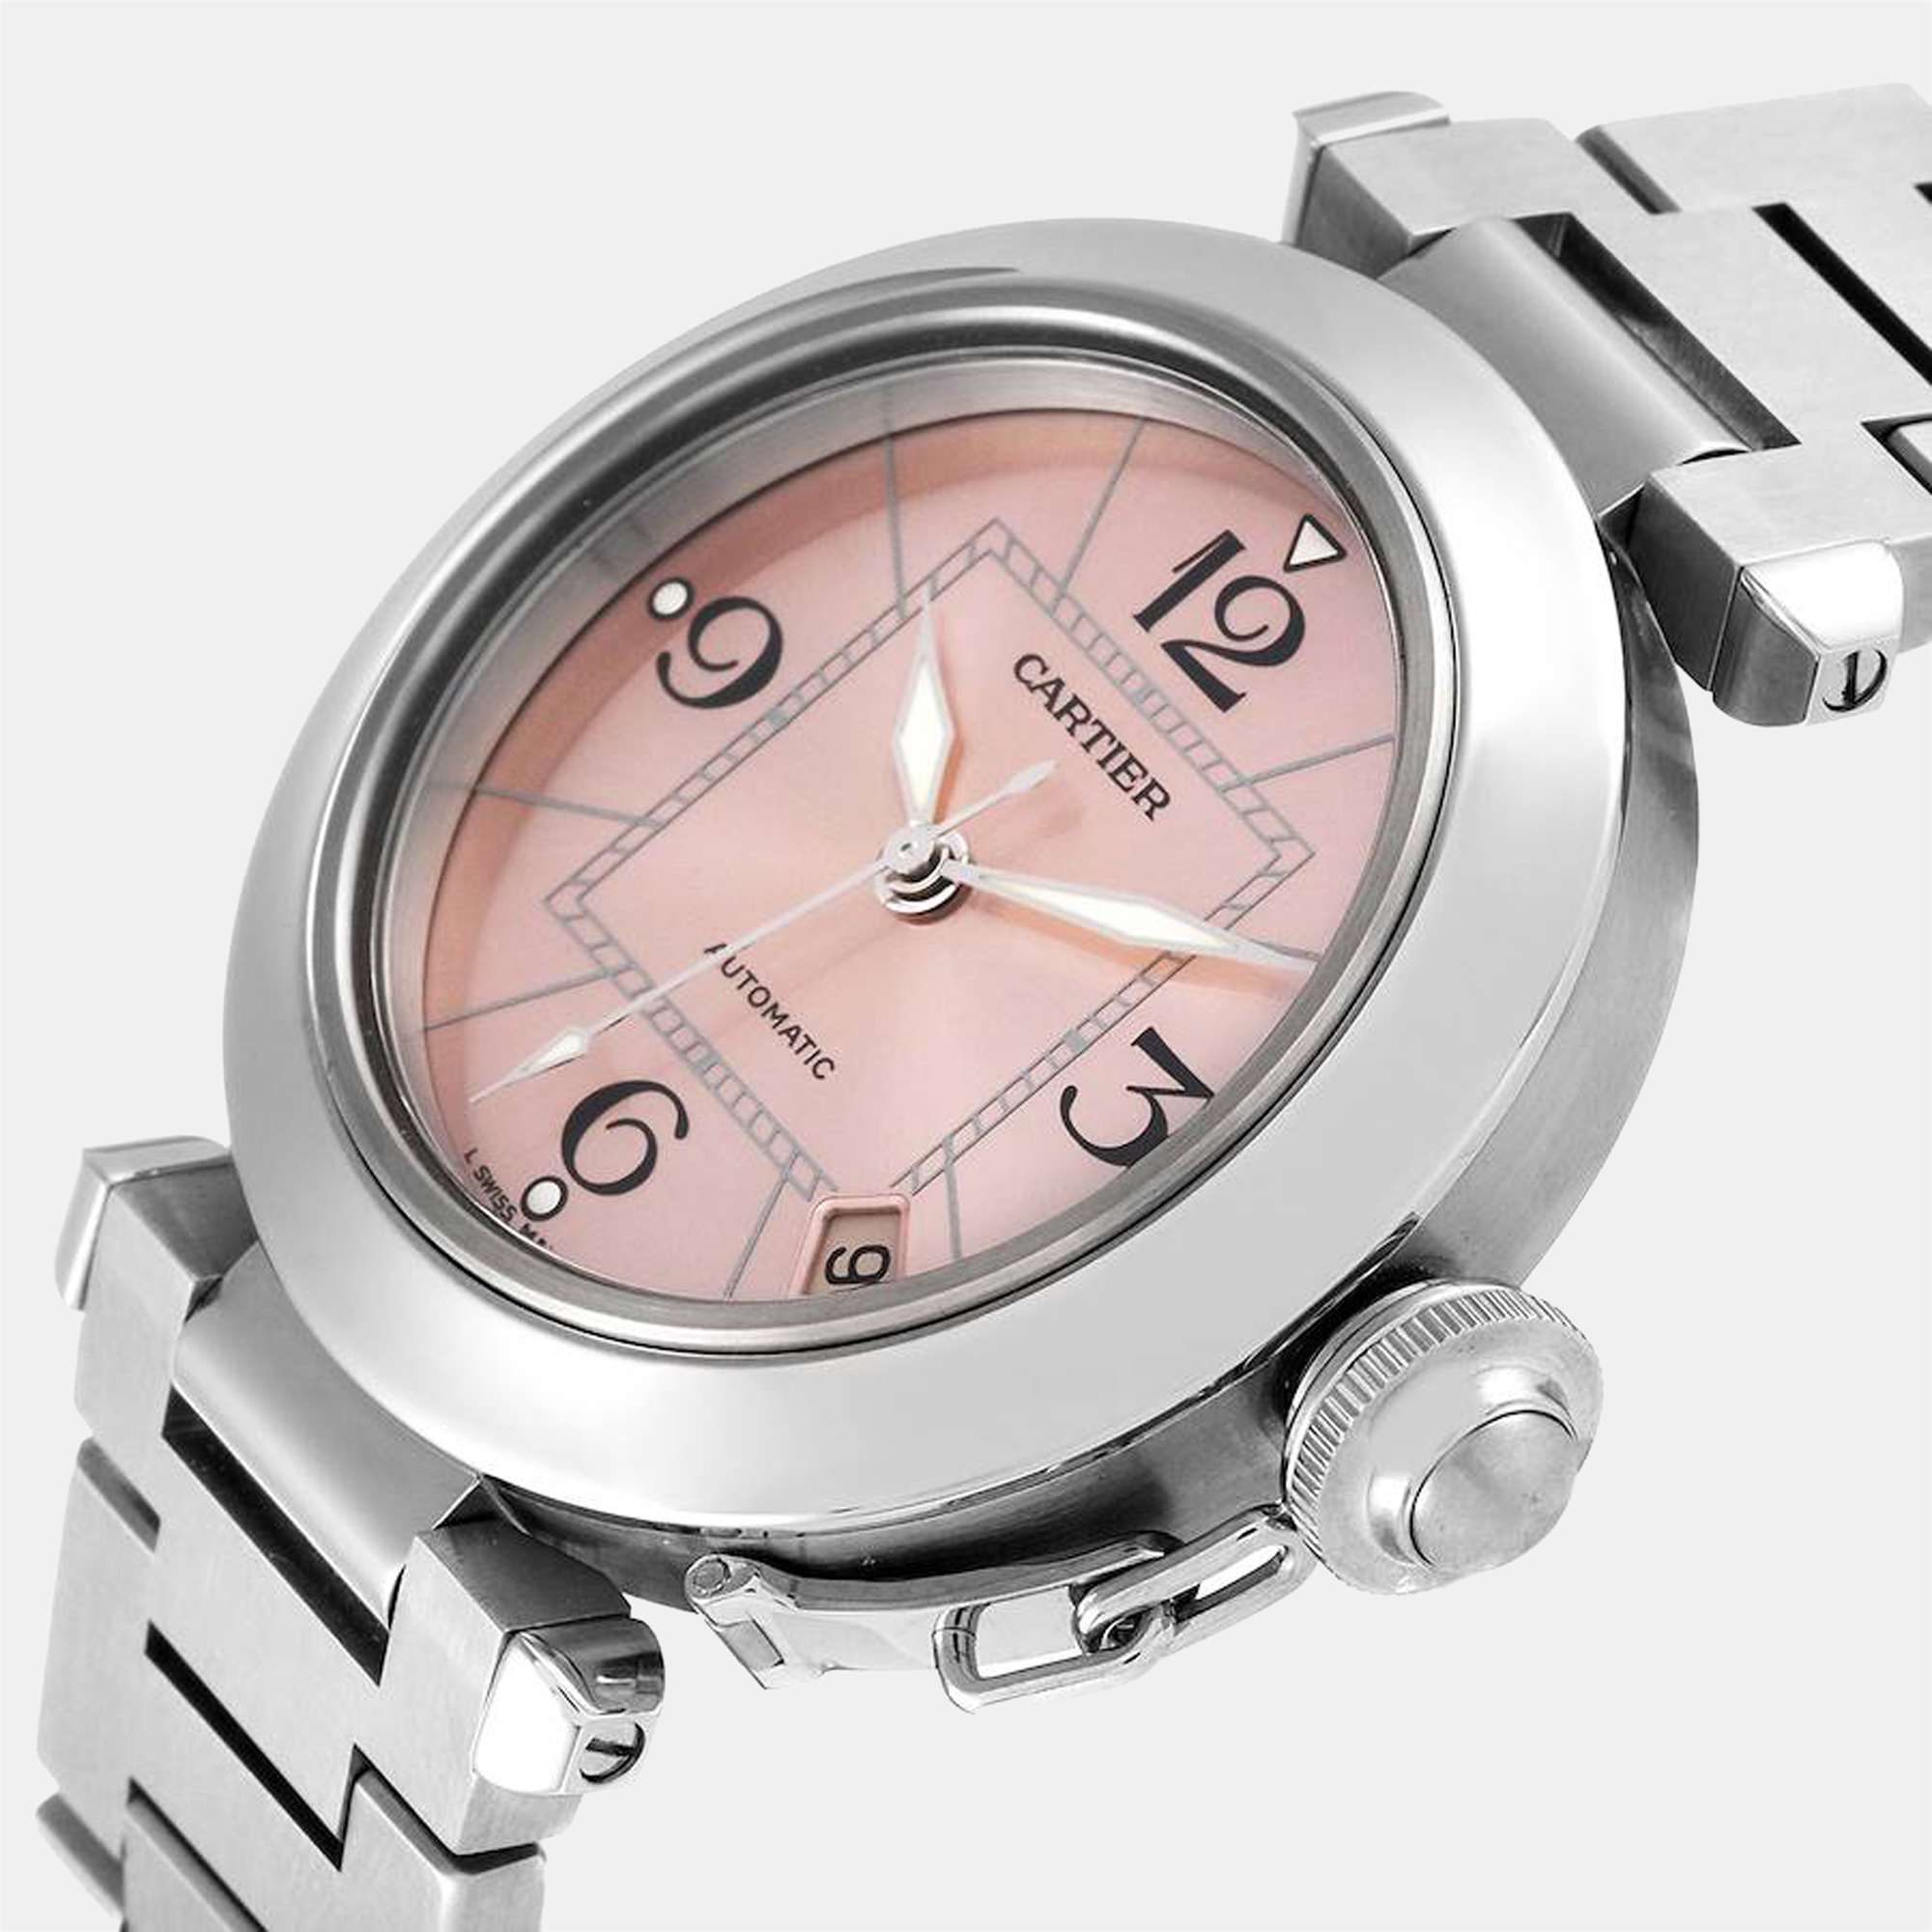 

Cartier Pink Stainless Steel Pasha C de Cartier W31075M7 Automatic Women's Wristwatch 35 mm